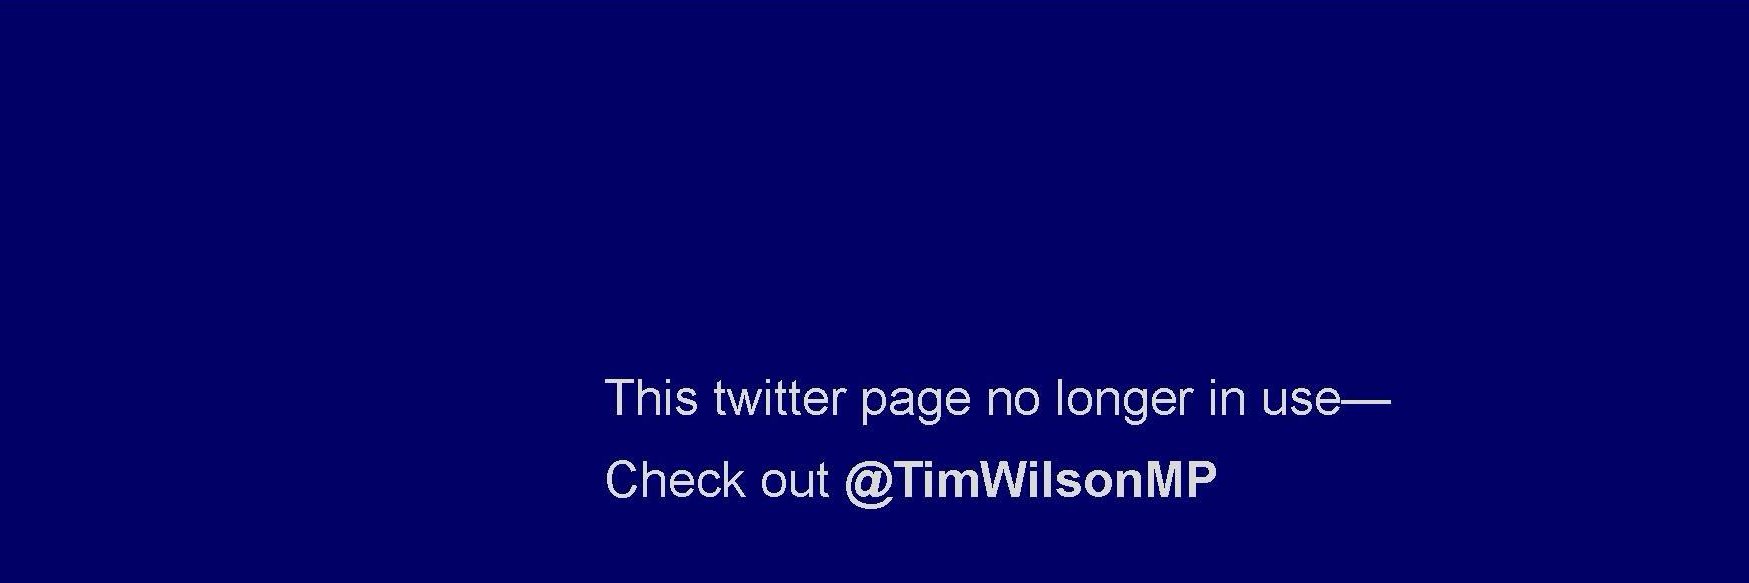 Tim Wilson MP